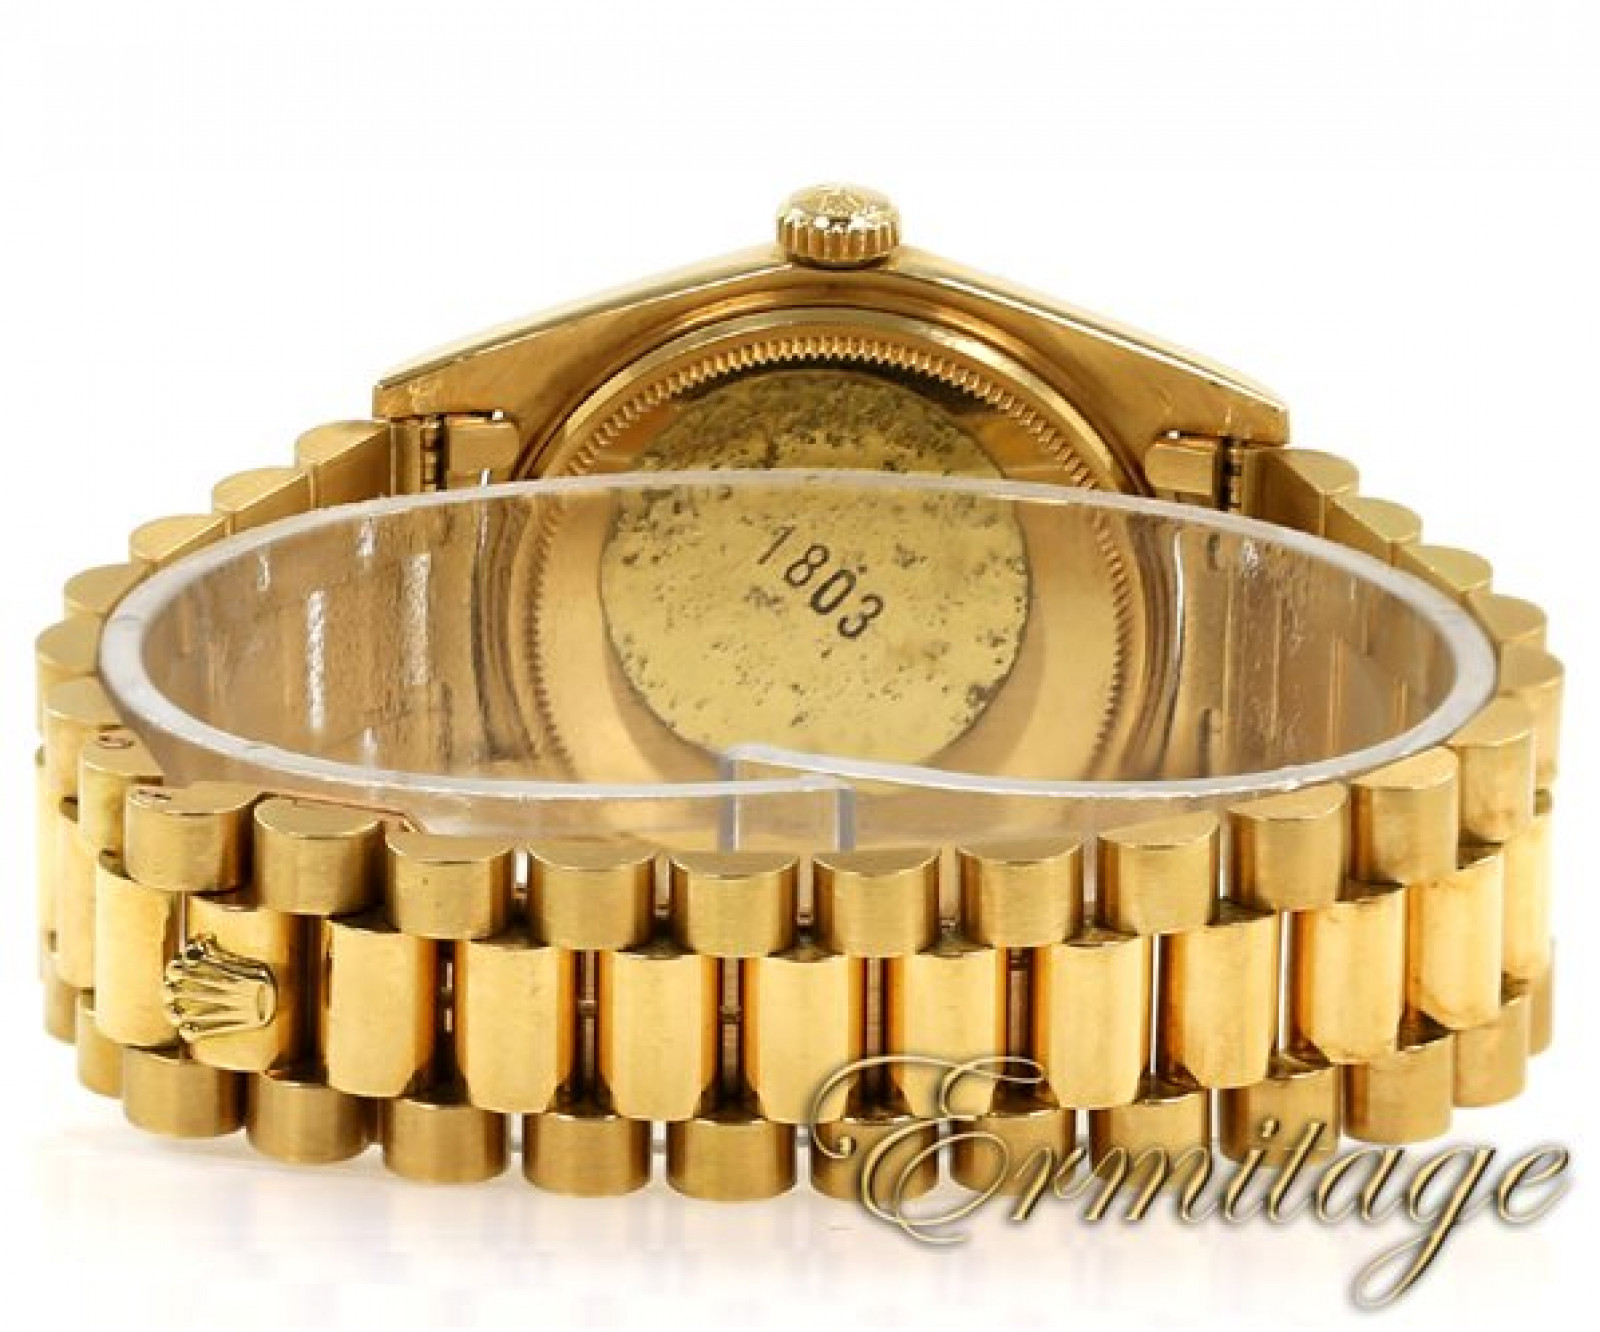 Vintage Rolex Day-Date 1803 Gold Year 1973 1973